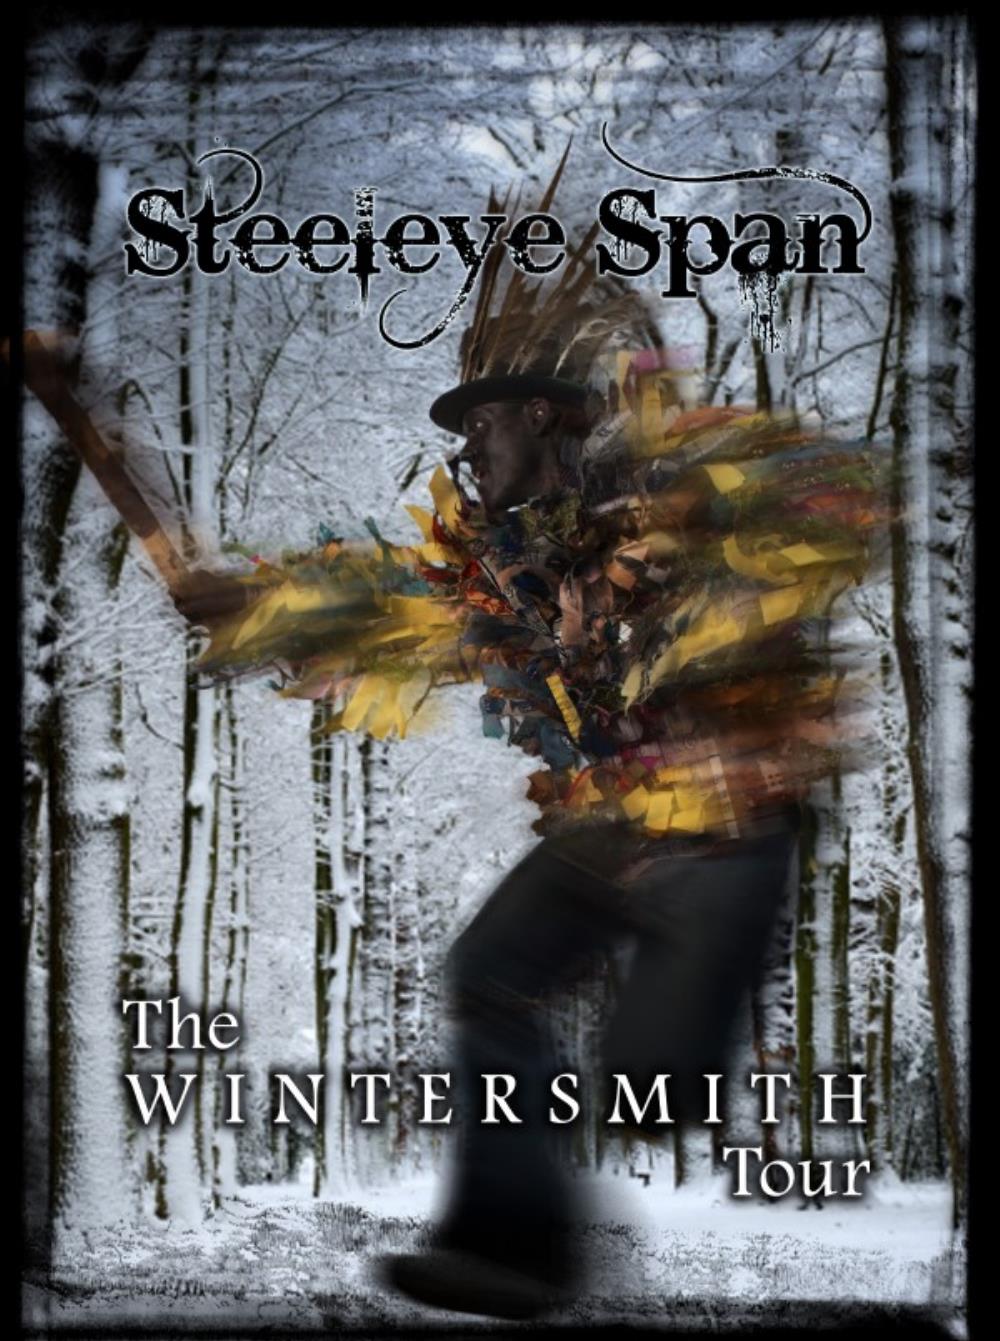 Steeleye Span The Wintersmith Tour featuring Terry Pratchett album cover